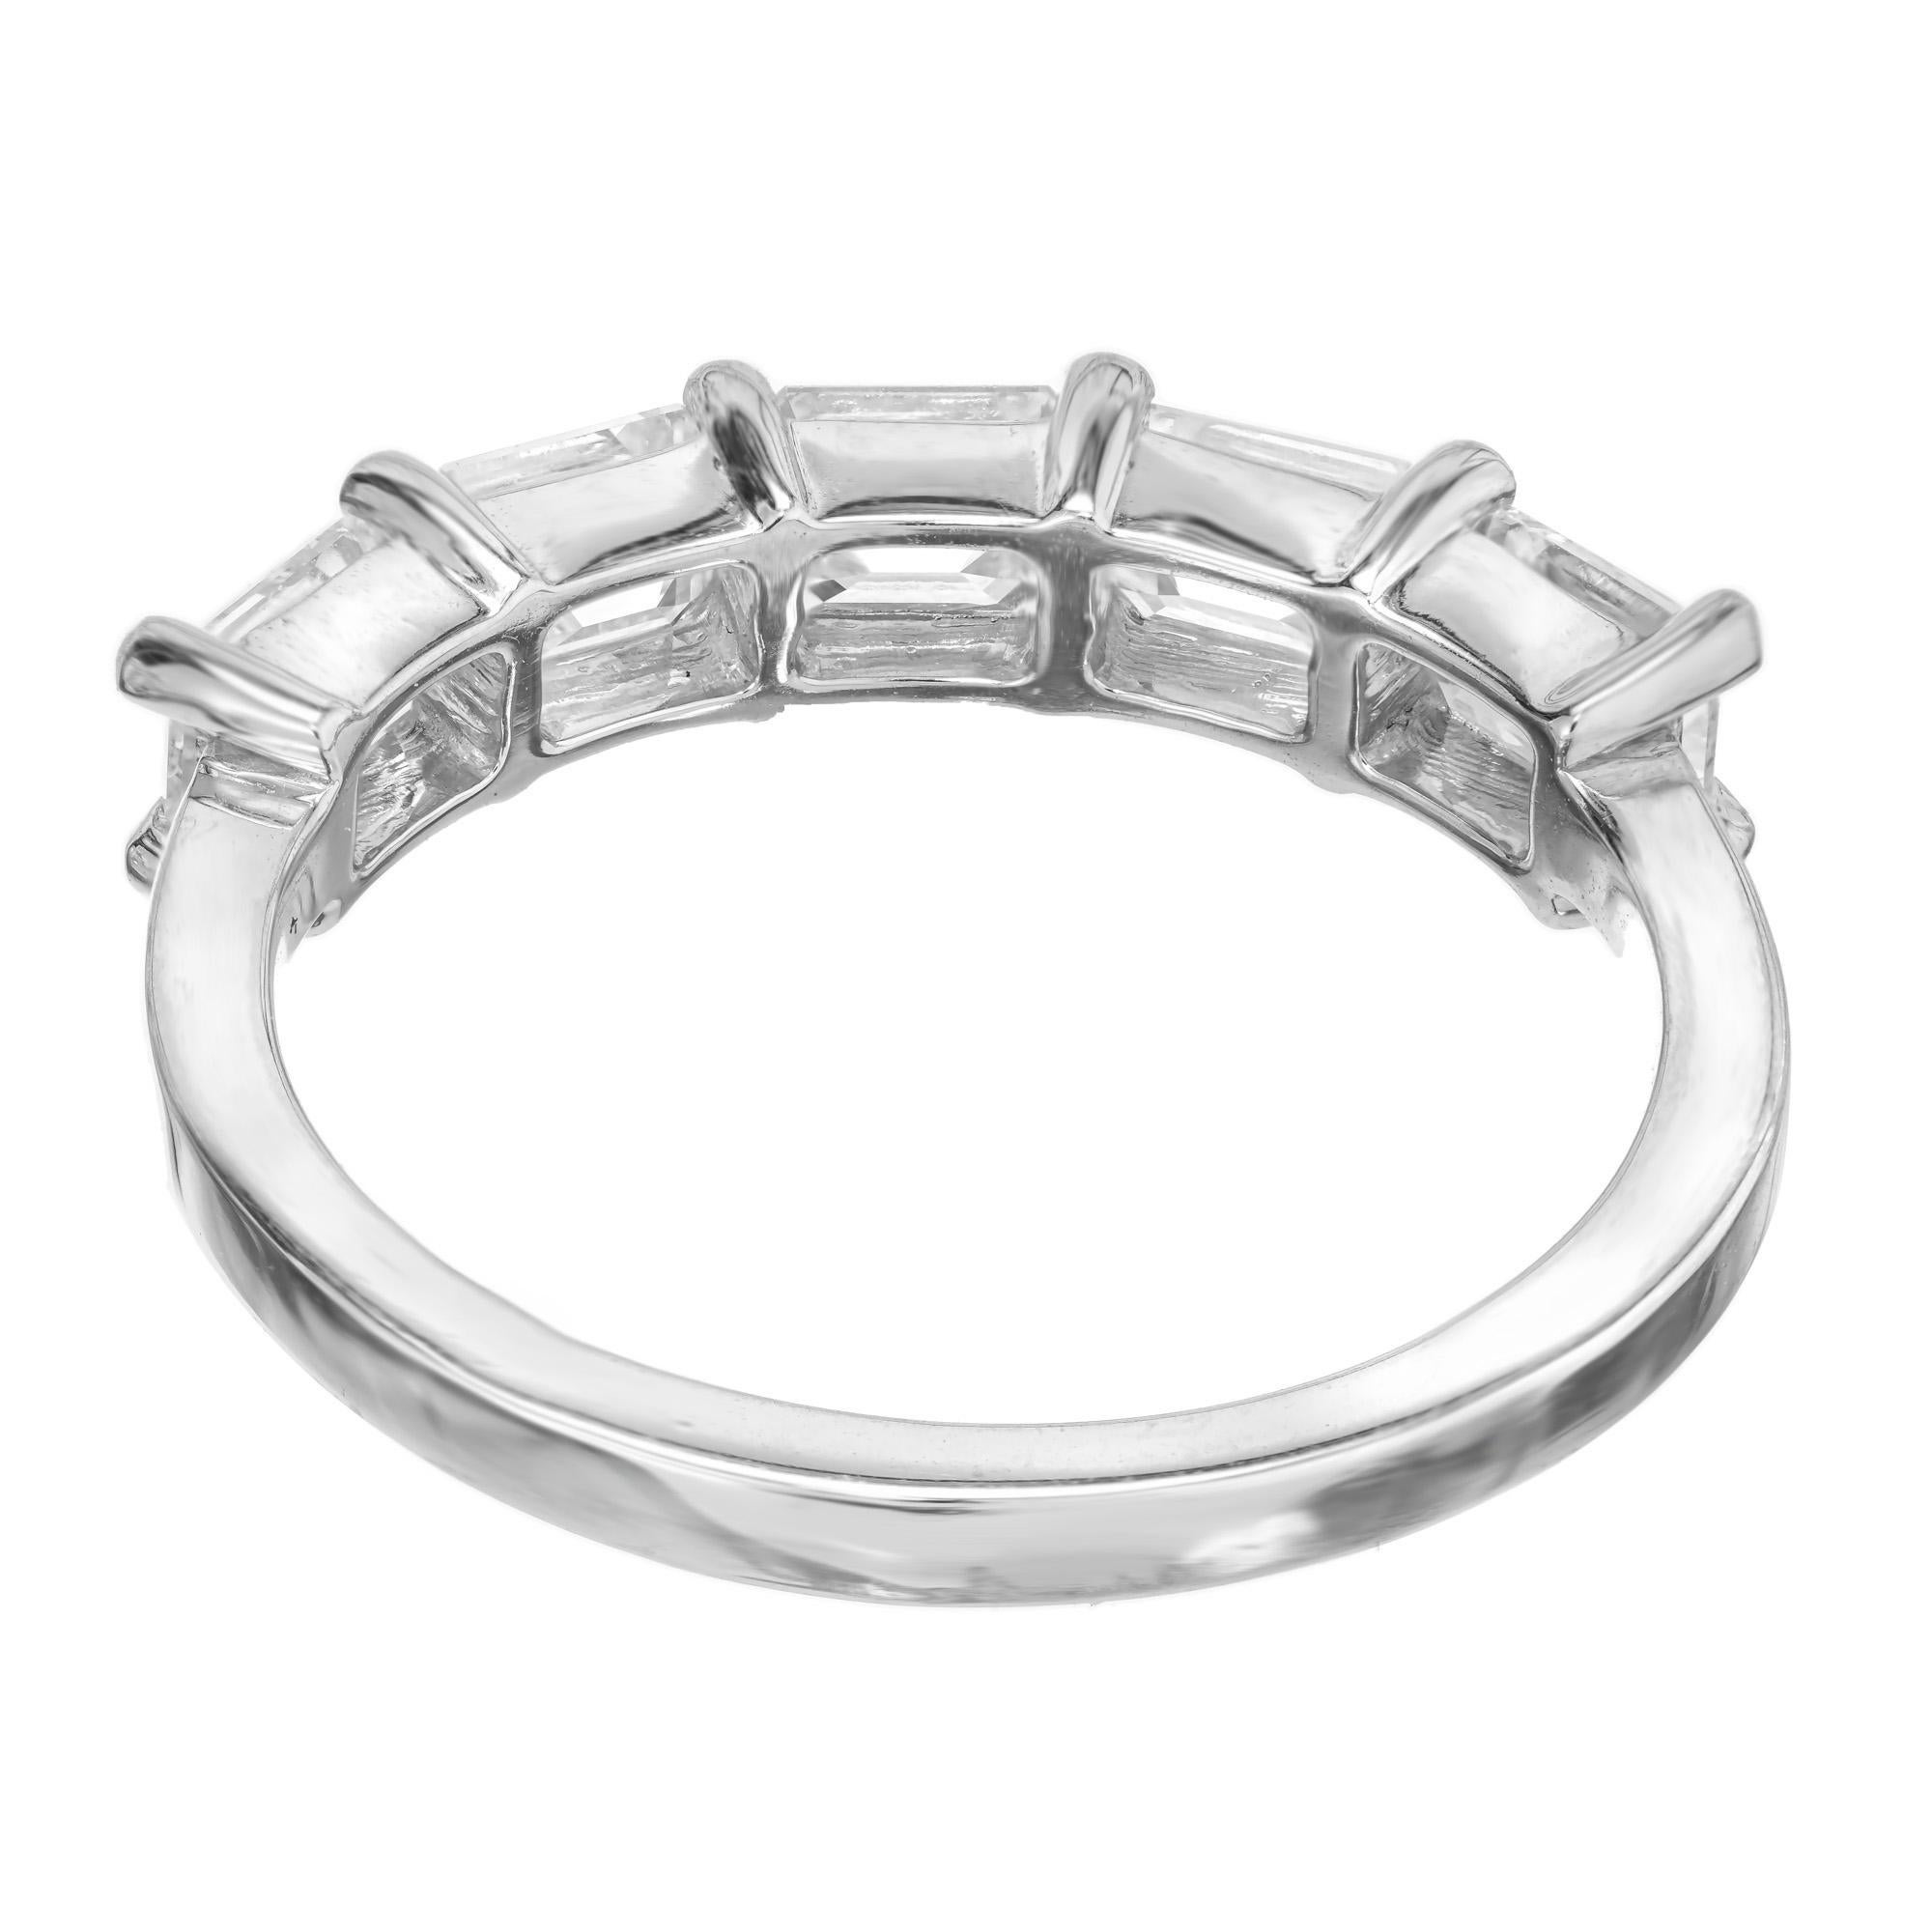 Peter Suchy 1.55 Carat Emerald Cut Diamond Platinum Wedding Band Ring For Sale 1